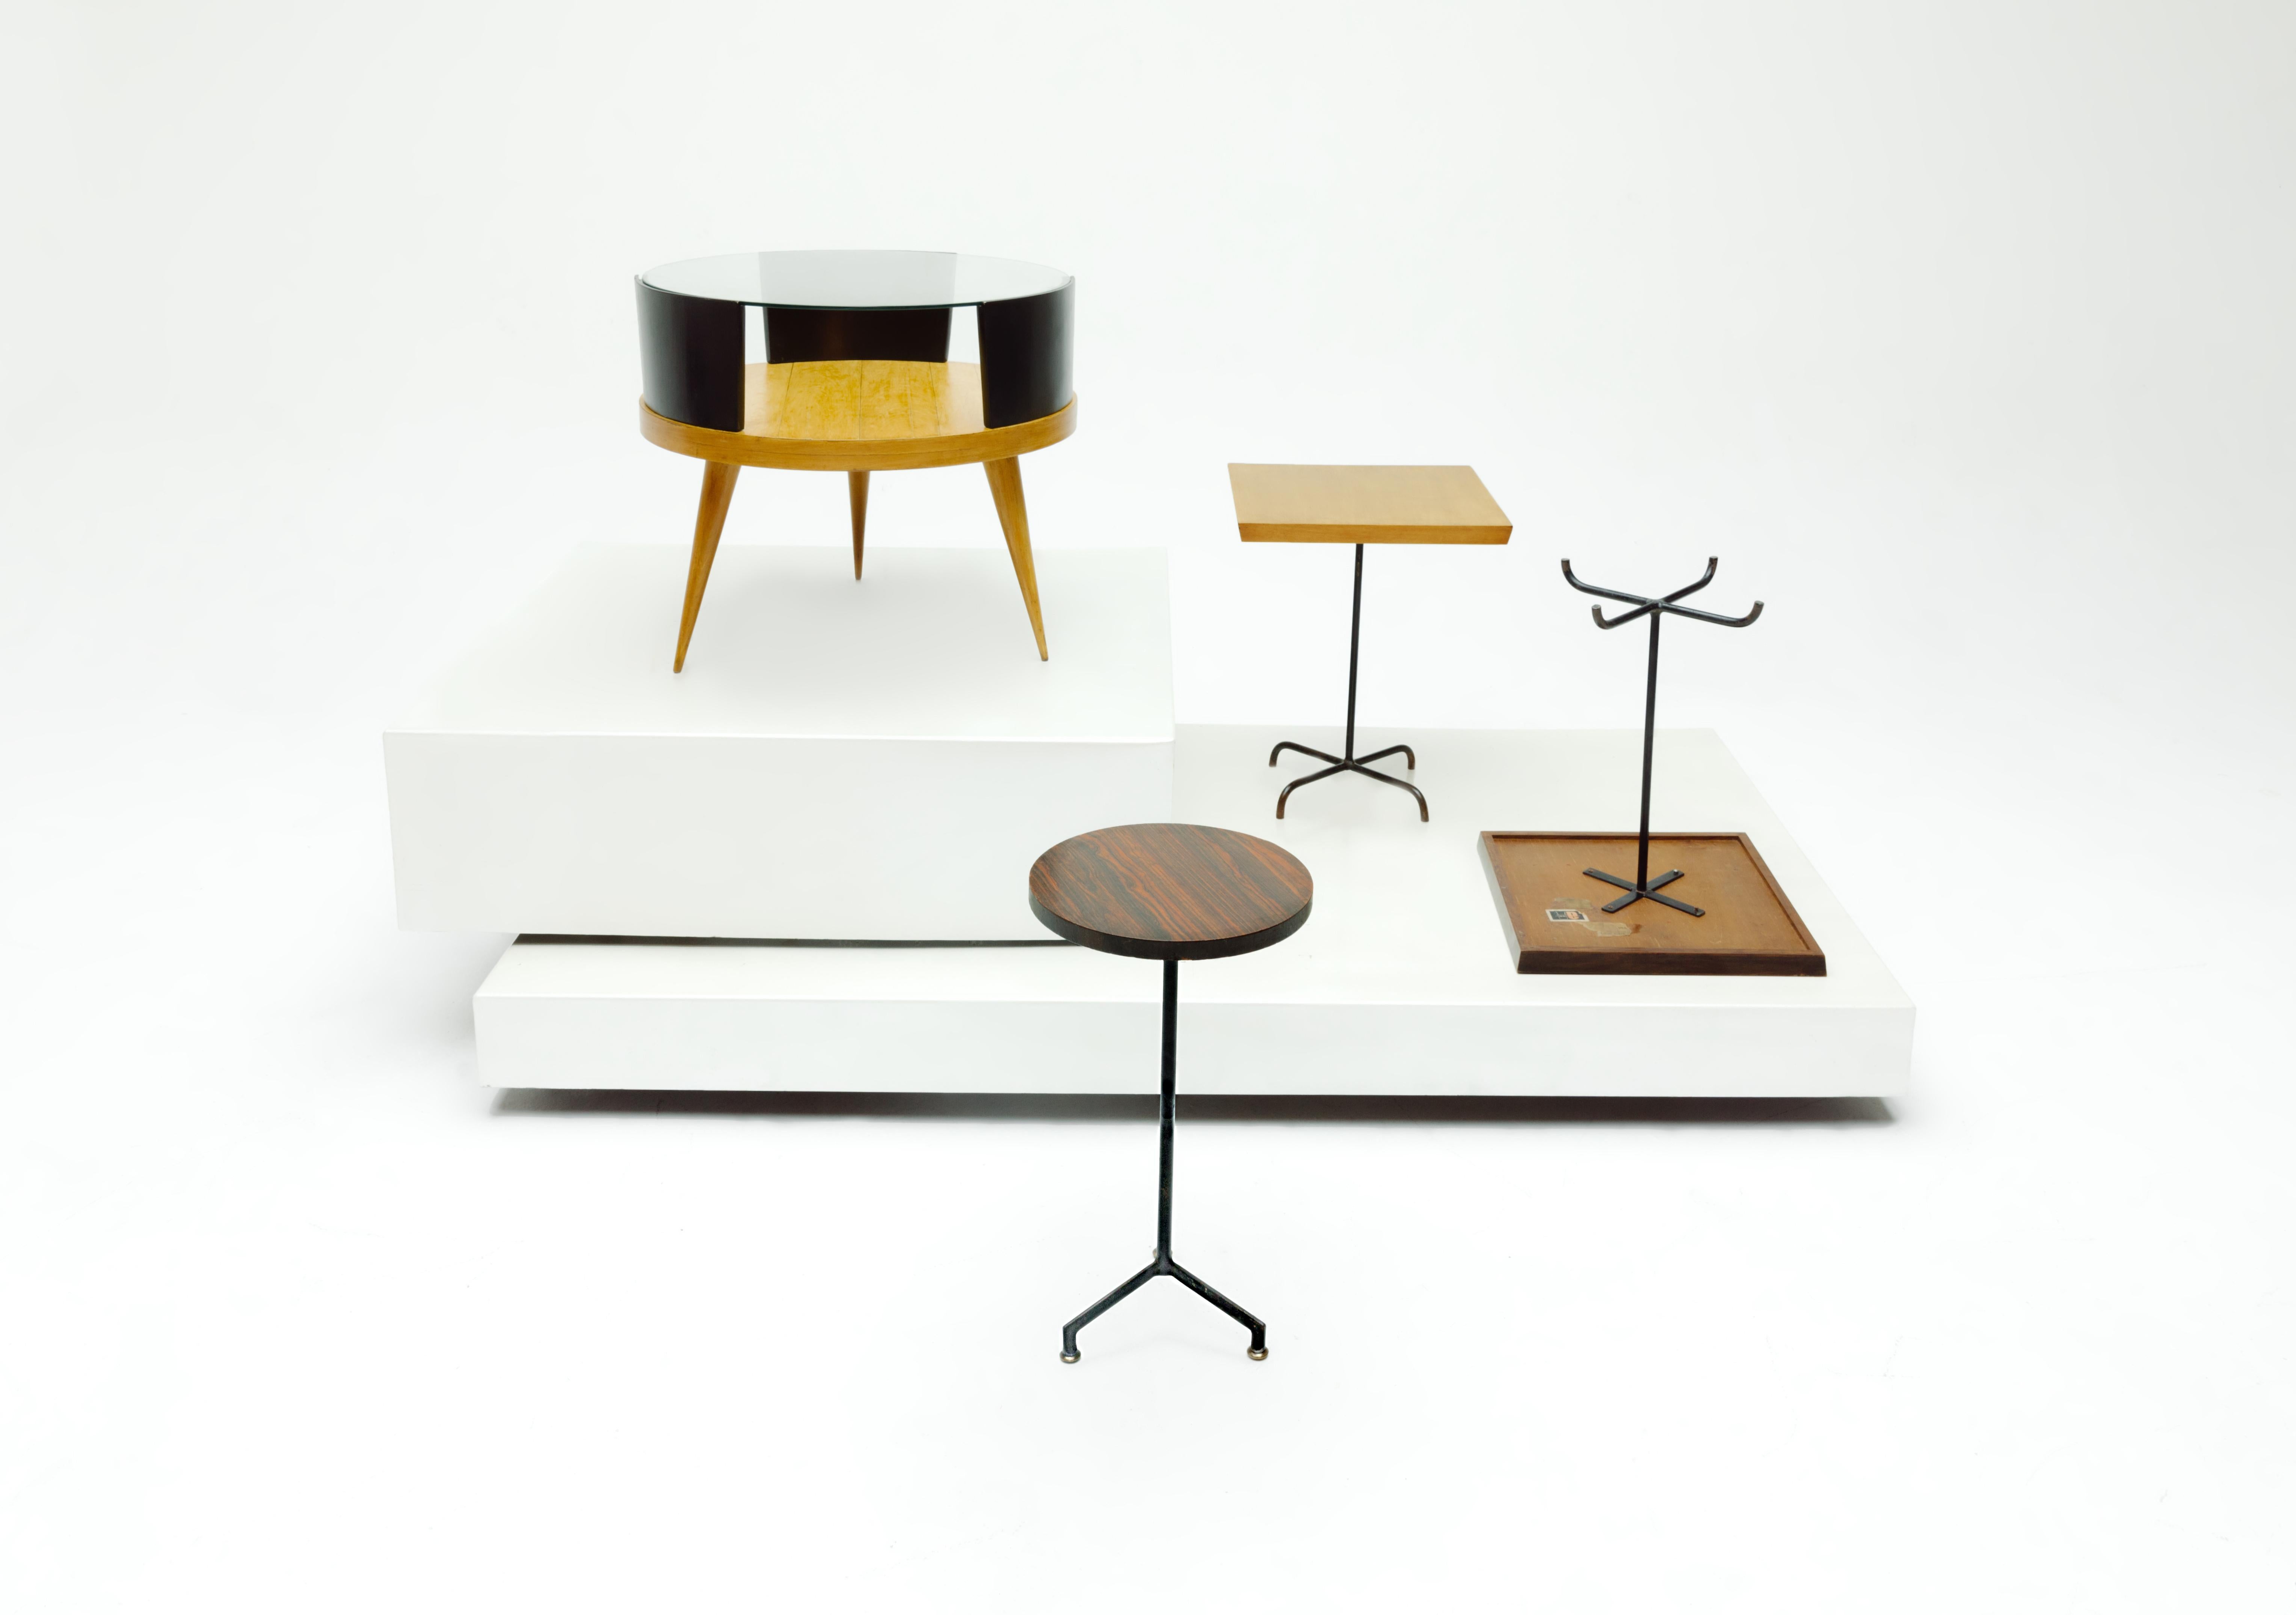 Iron Round Side Table by Carlo Hauner and Martin Eisler, Brazilian Midcentury Design